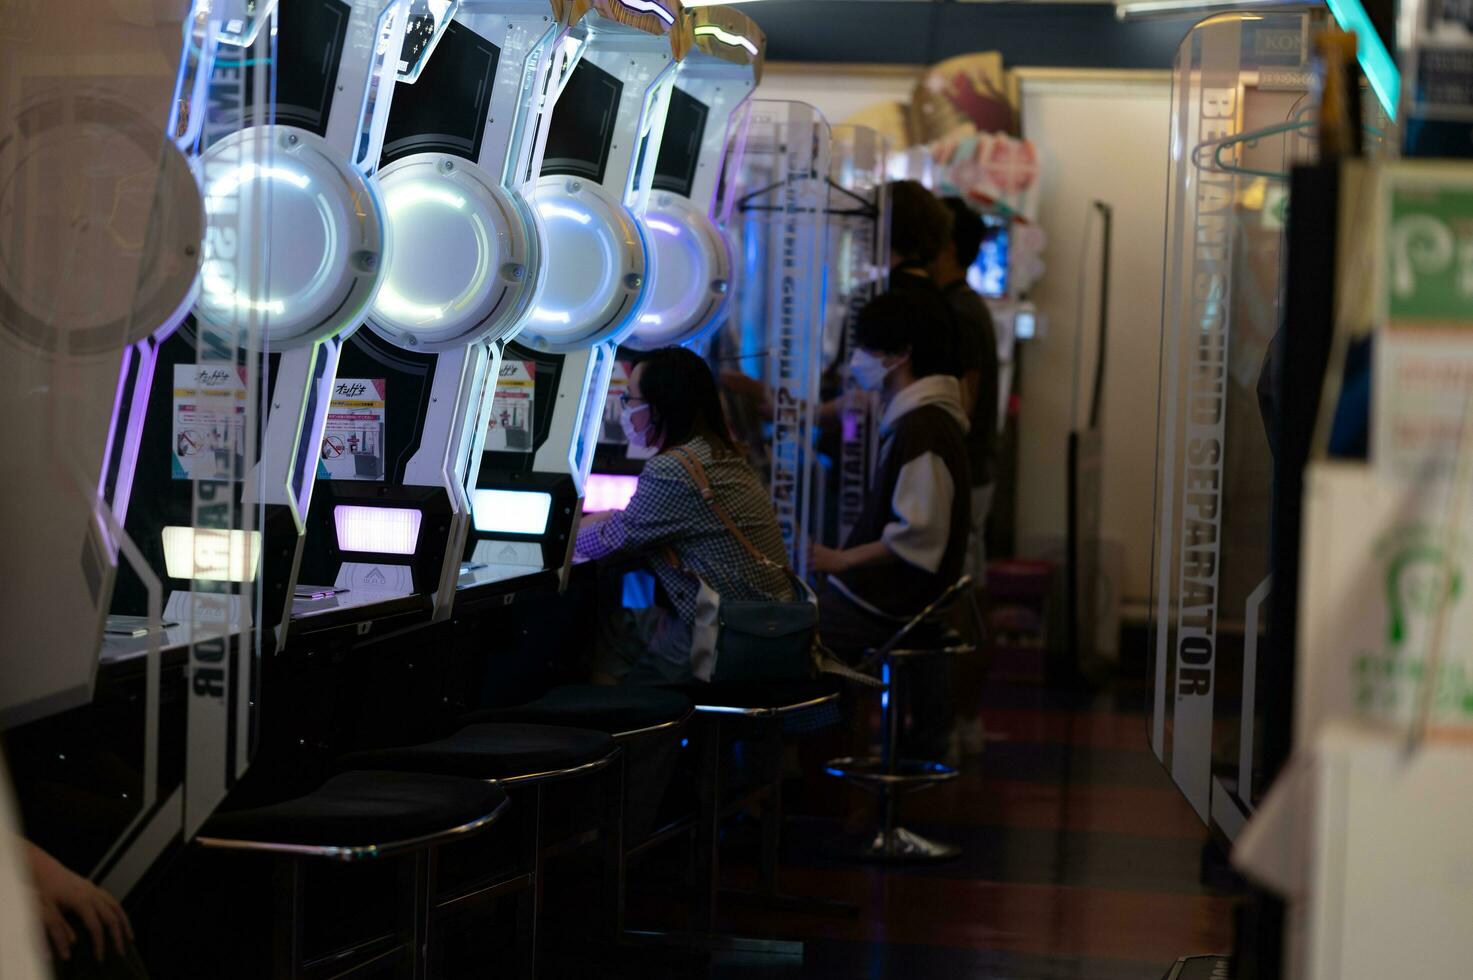 akihabara Tokio, Japan kann 05 2023 Tokio Neon- Nächte akihabara nach dunkel - - Stadtbild, Arkade Spiele, und Nachtzeit Freuden foto